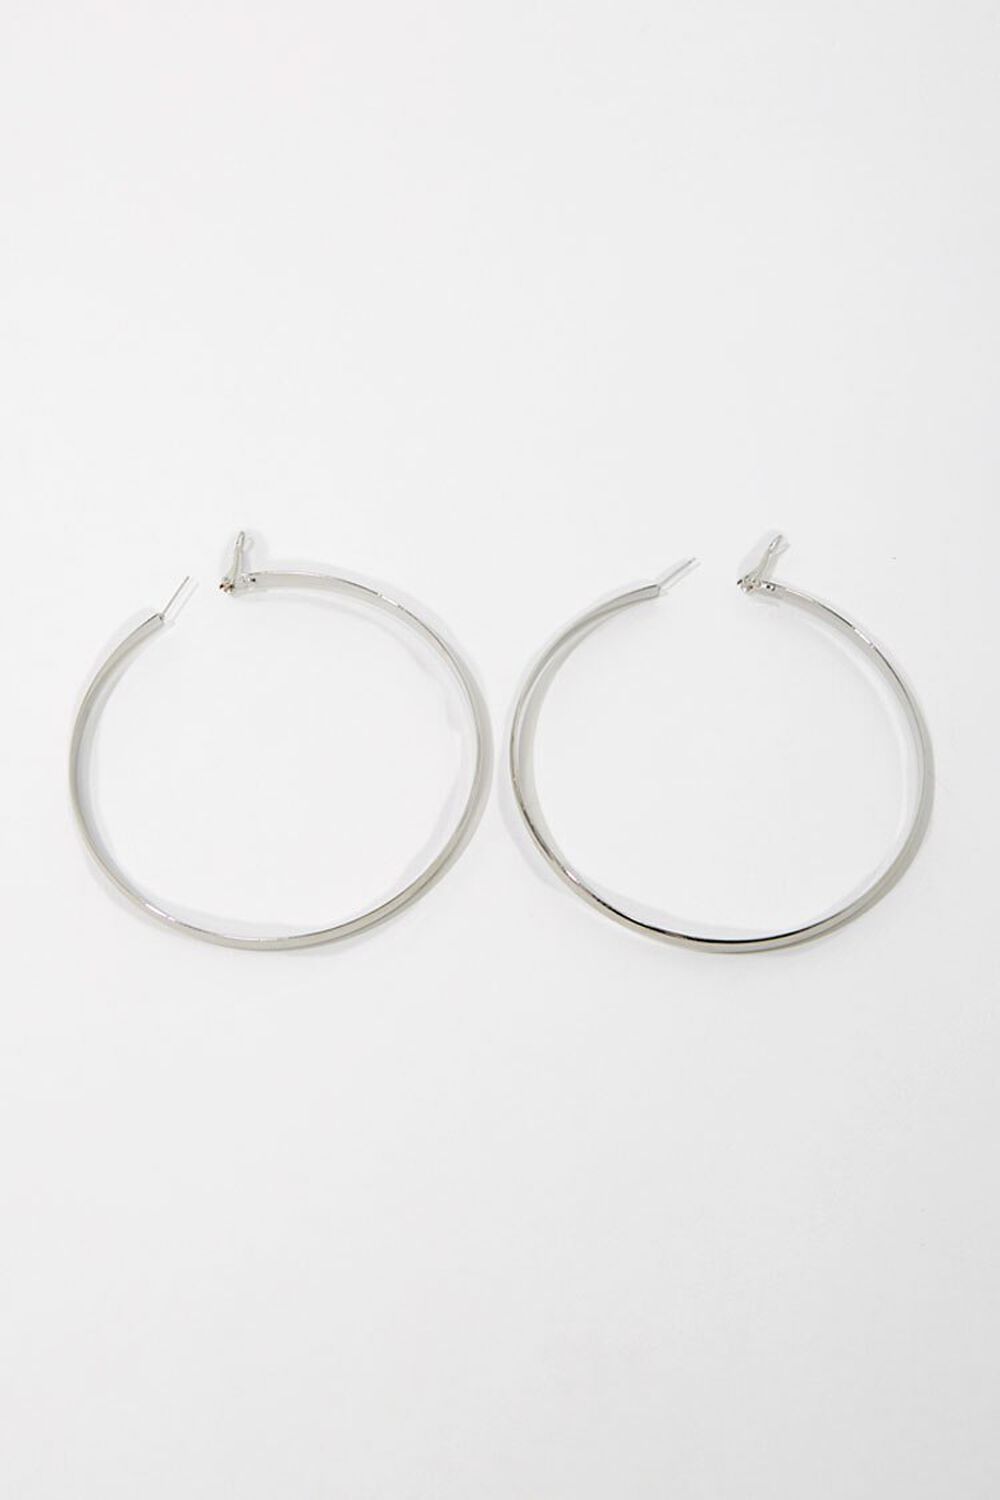 SILVER High-Polish Hoop Earrings, image 1